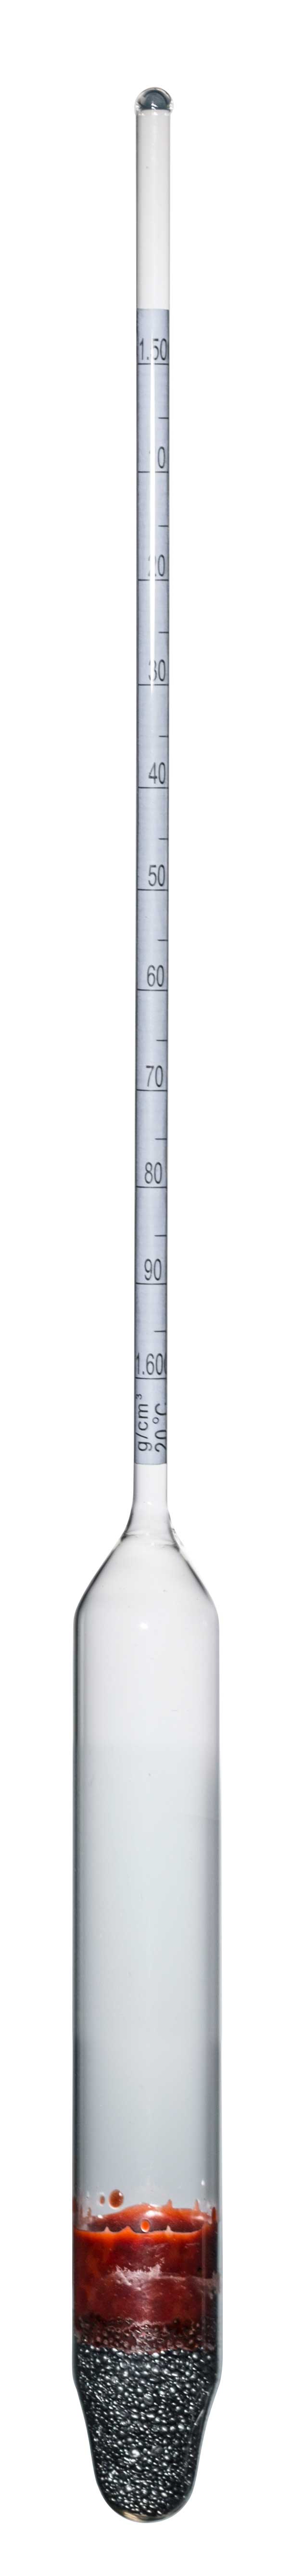 Densímetros de precisión, rango total 0,100g/cm3, sin termómetro, 300mm longitud